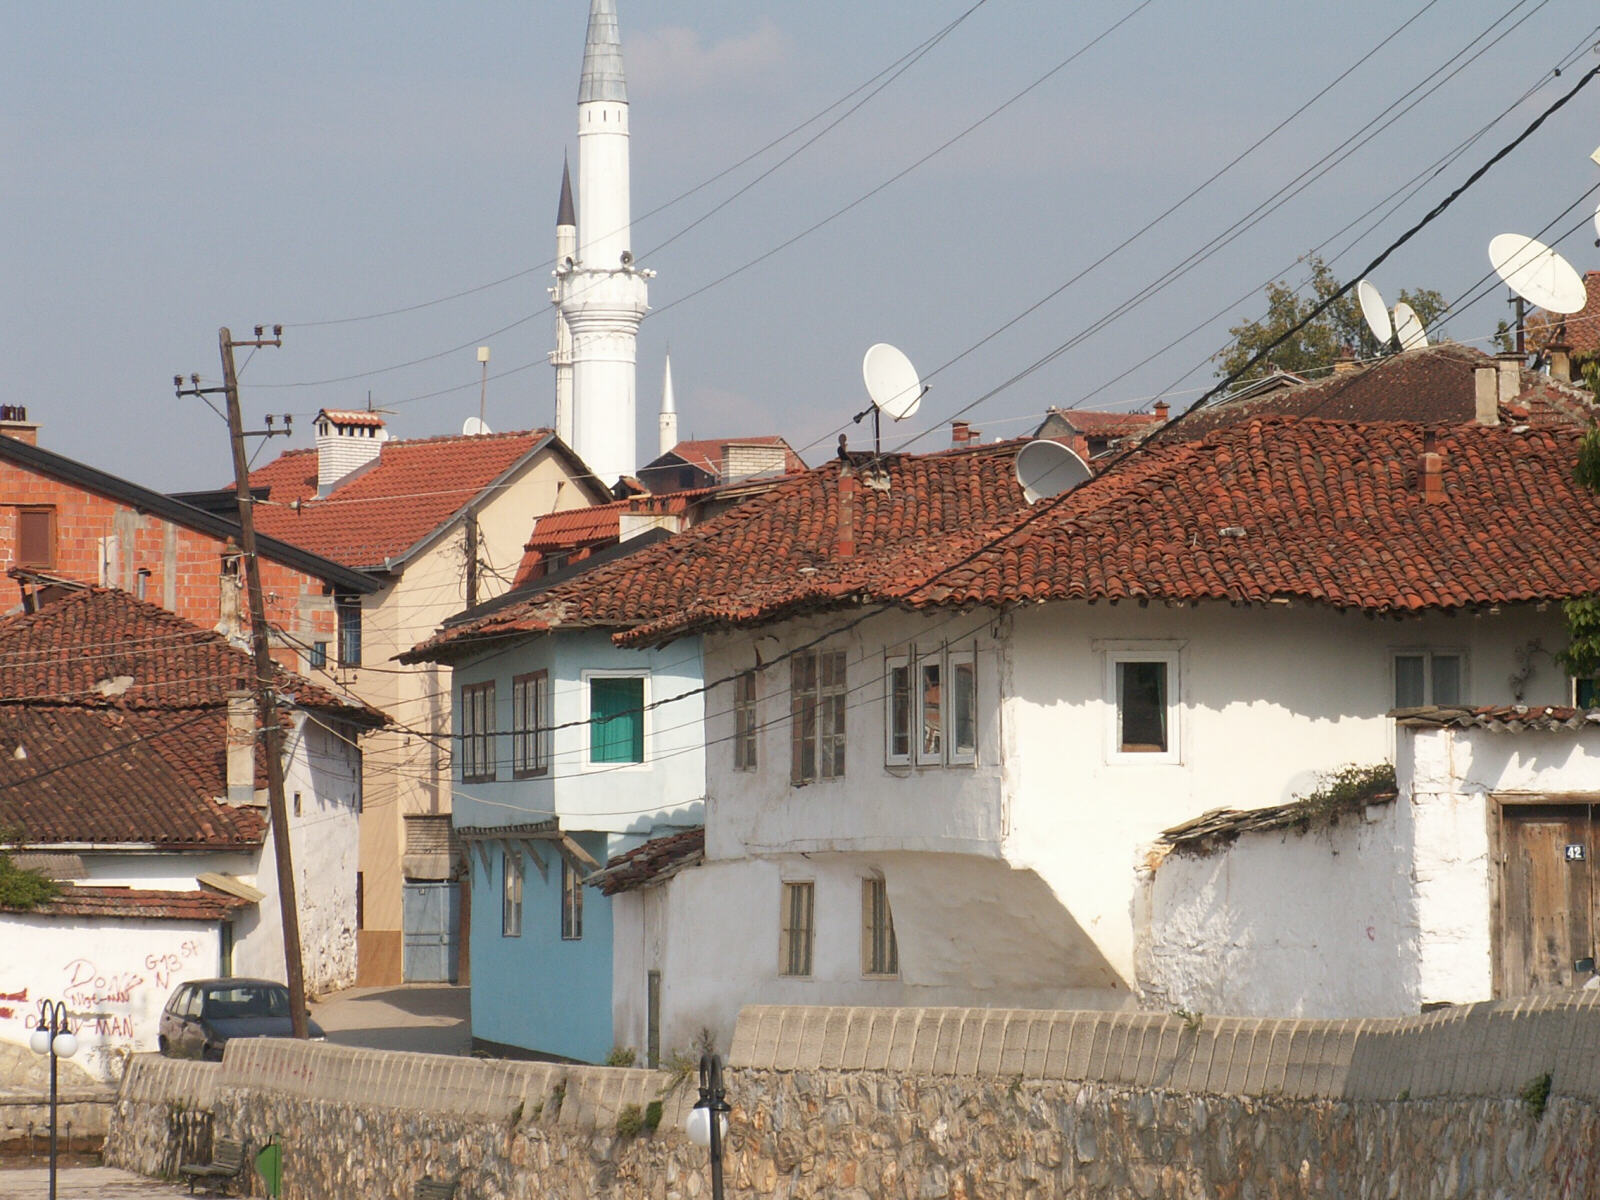 Houses by the river in Prizren, Kosovo